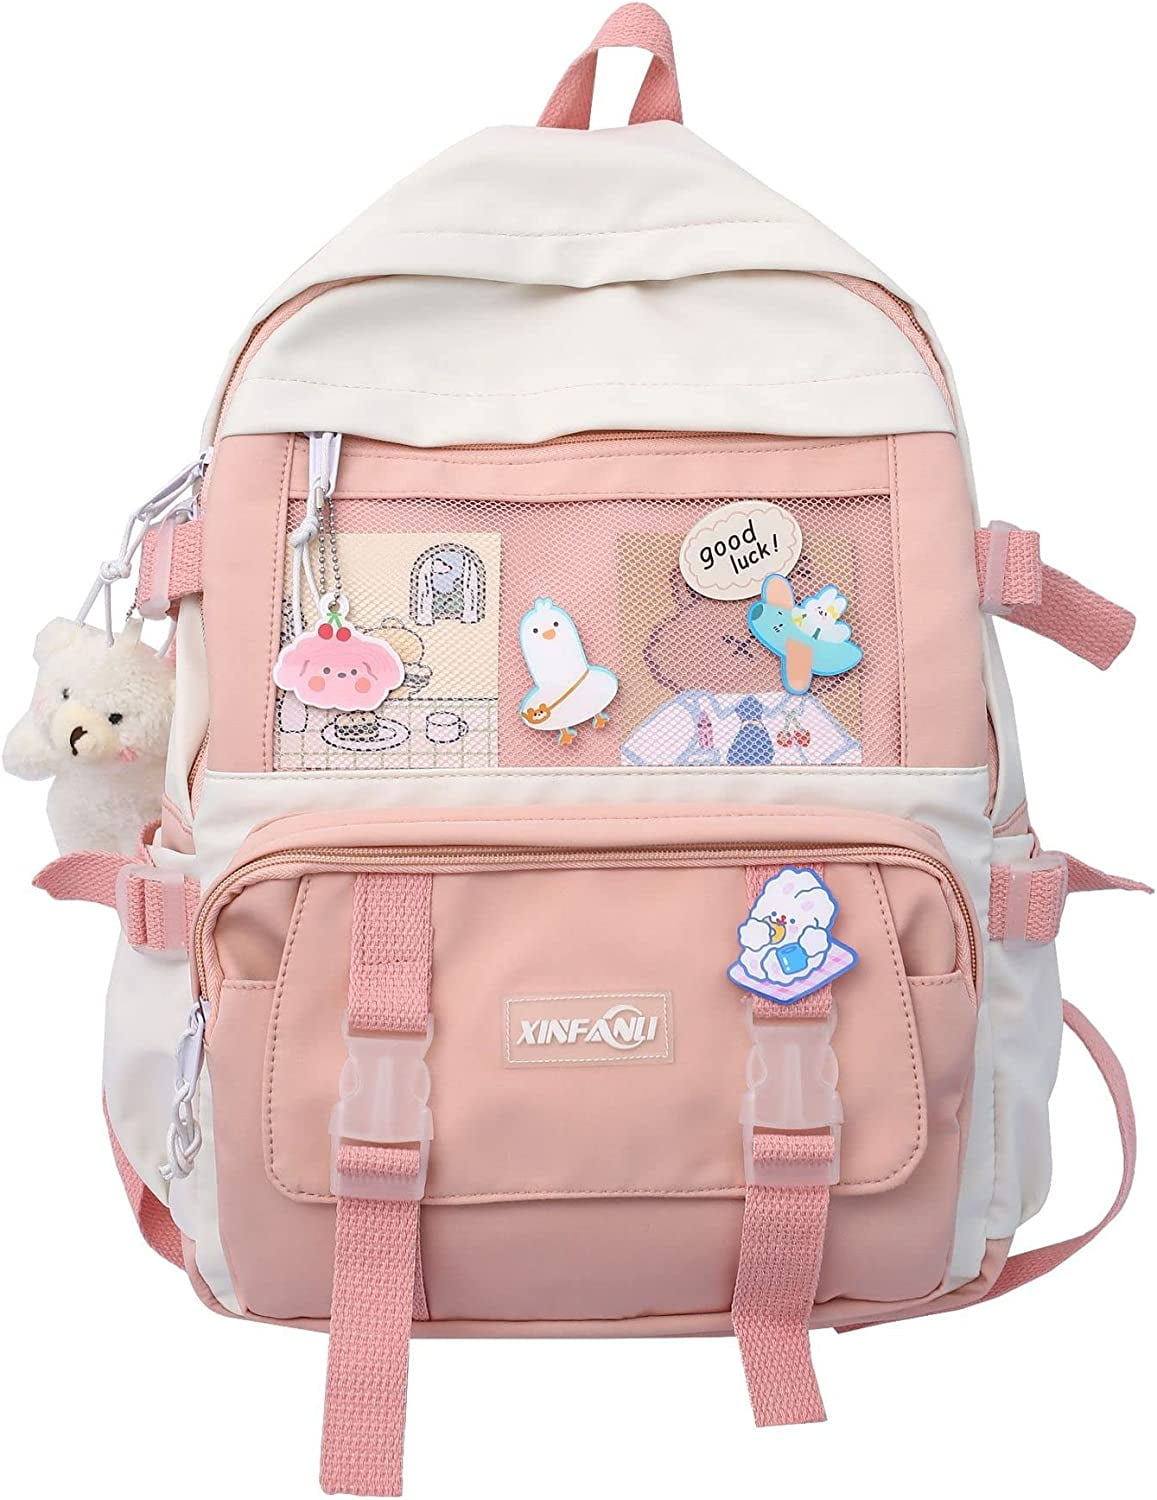 Buy My Melody Bag, Cinnamoroll Bag Cute Cartoon Shoulder Bag Anime Cosplay  Doll Handbag, Pink, 6.3 x 5.3 x 2.6 in at Amazon.in